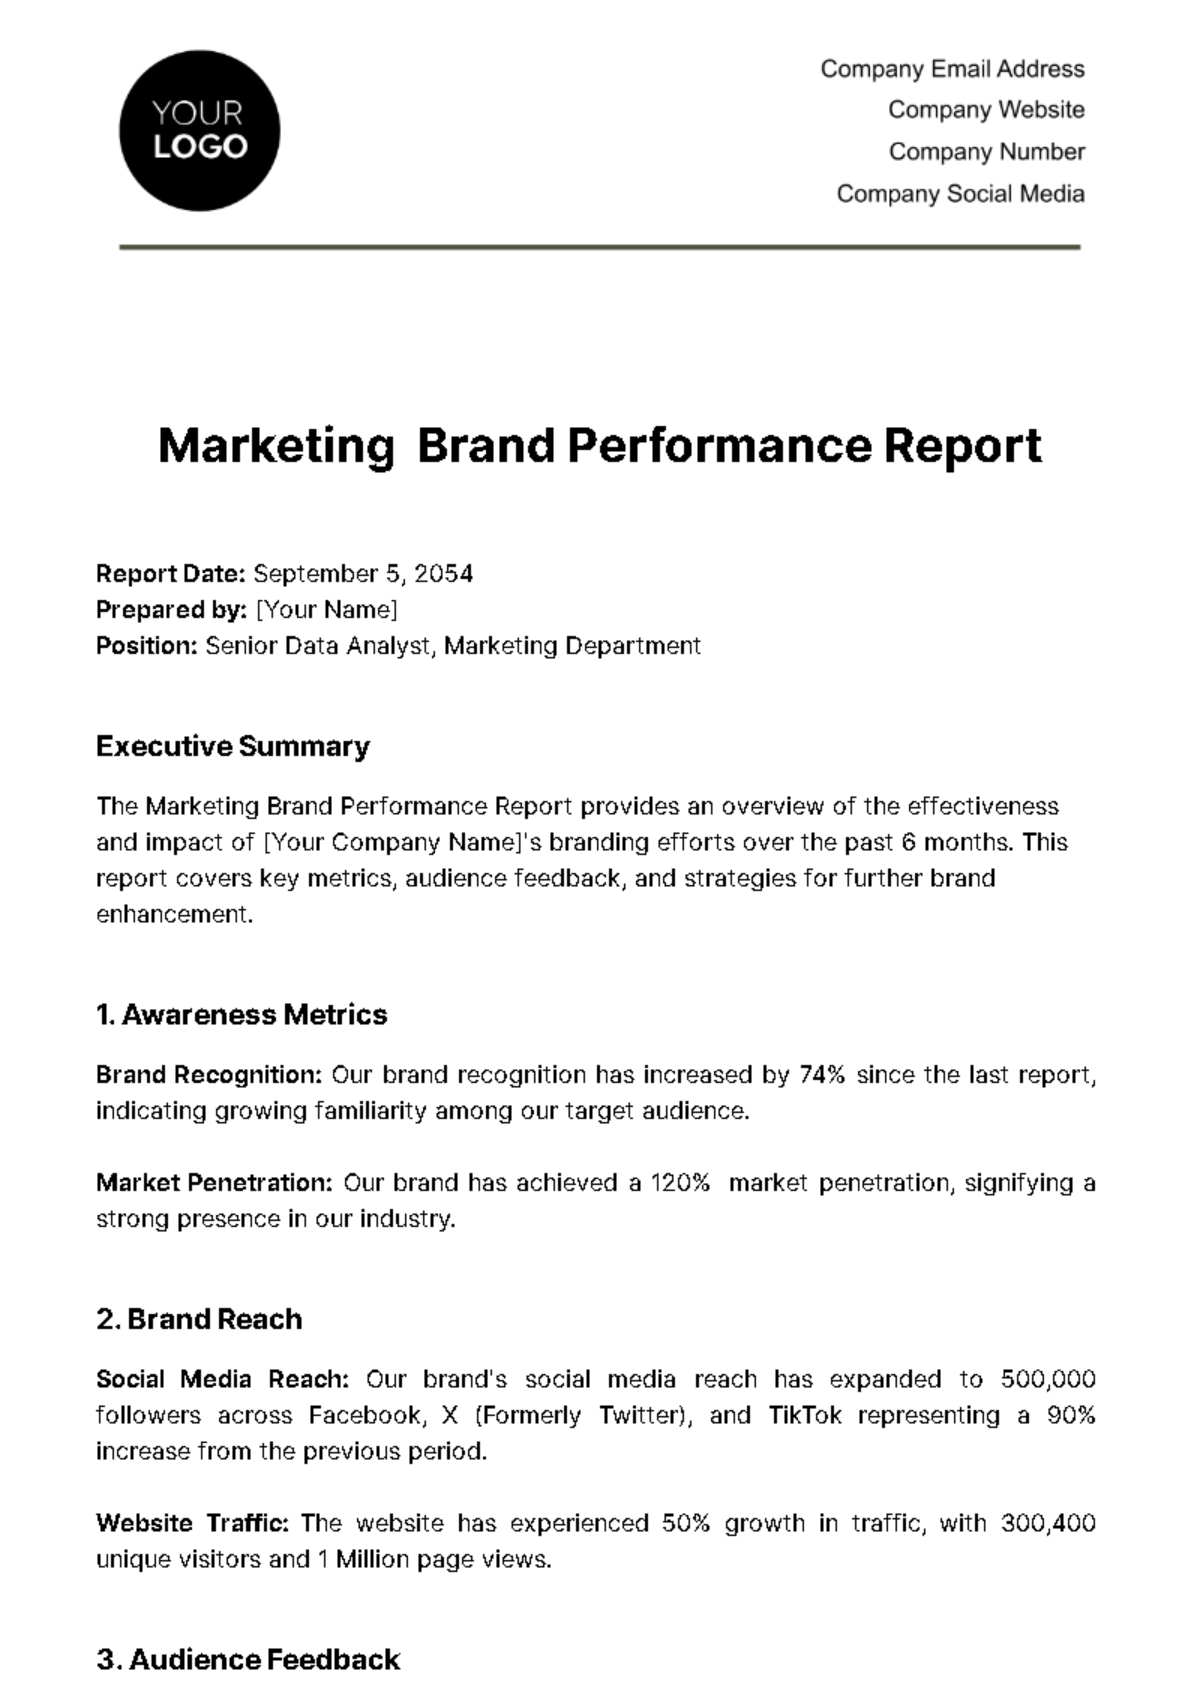 Free Marketing Brand Performance Report Template